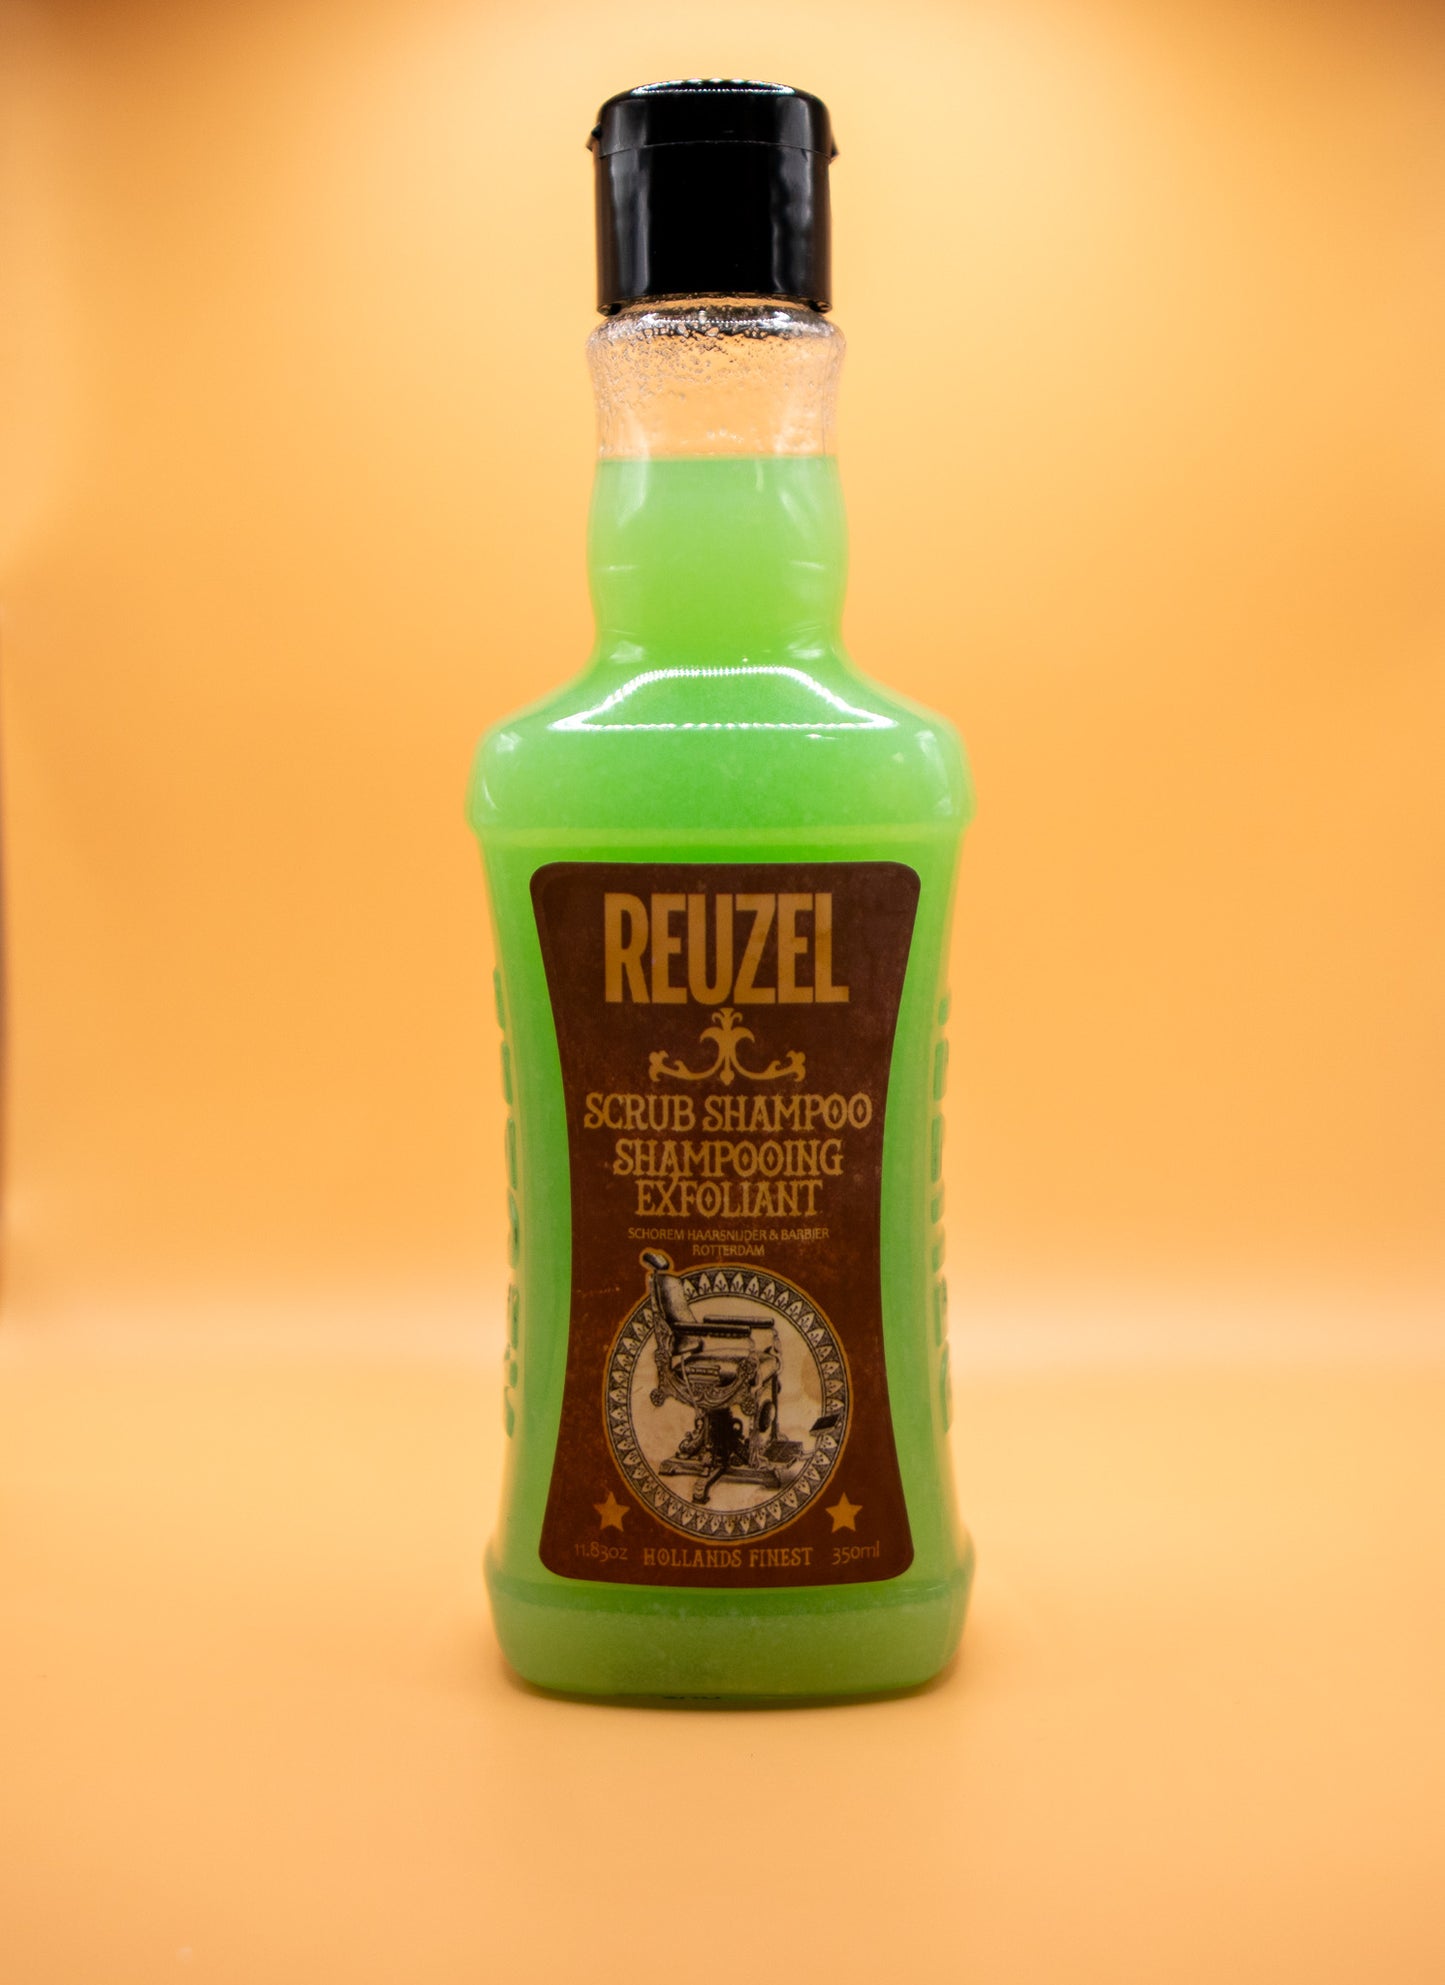 Reuzel's Scrub Shampoo (Shampooing Exfoliant)